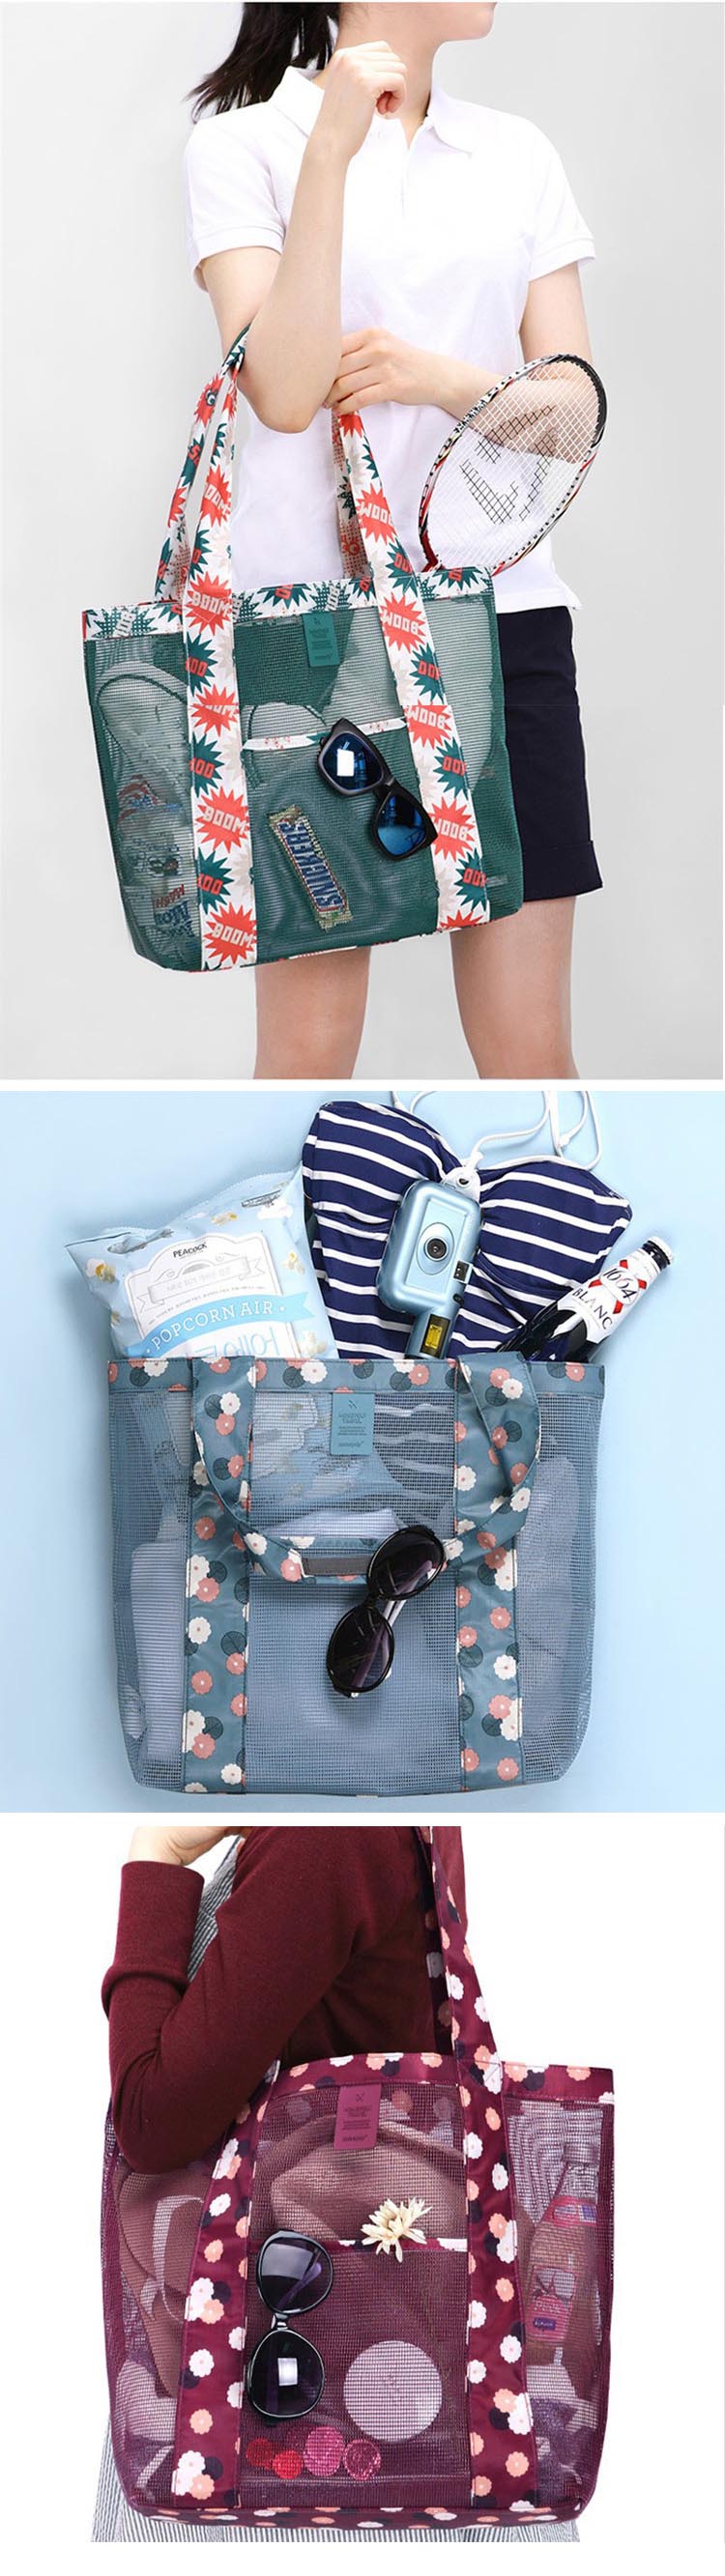 WEEKEIGHT fashion female mesh single shoulder bag shopping bag bag bag size Travel Beach Bag3